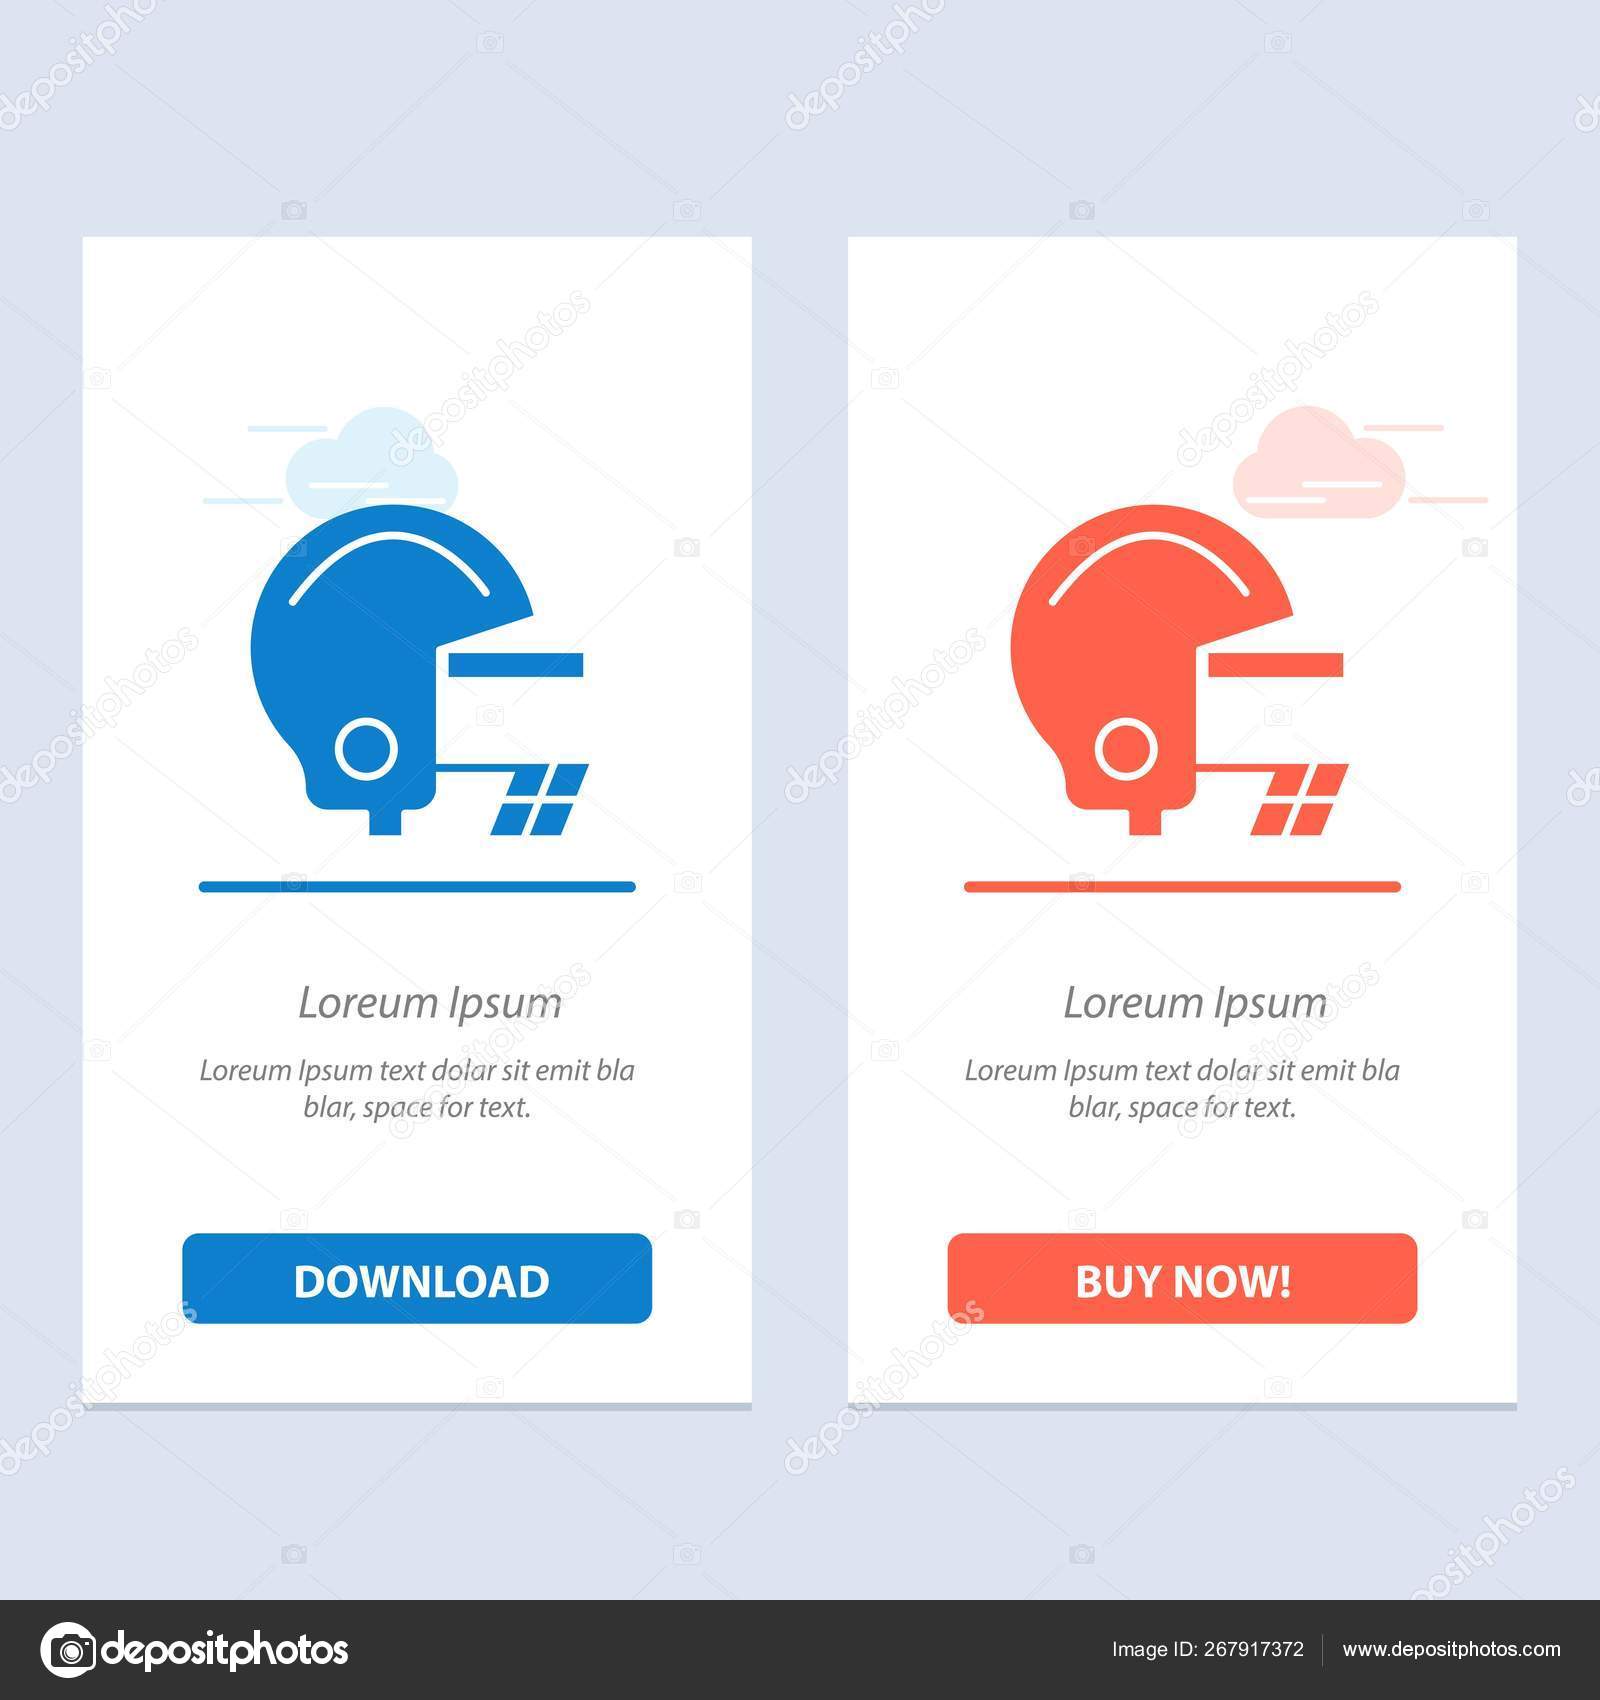 American Football Helmet Blueprints Stock Illustration - Download